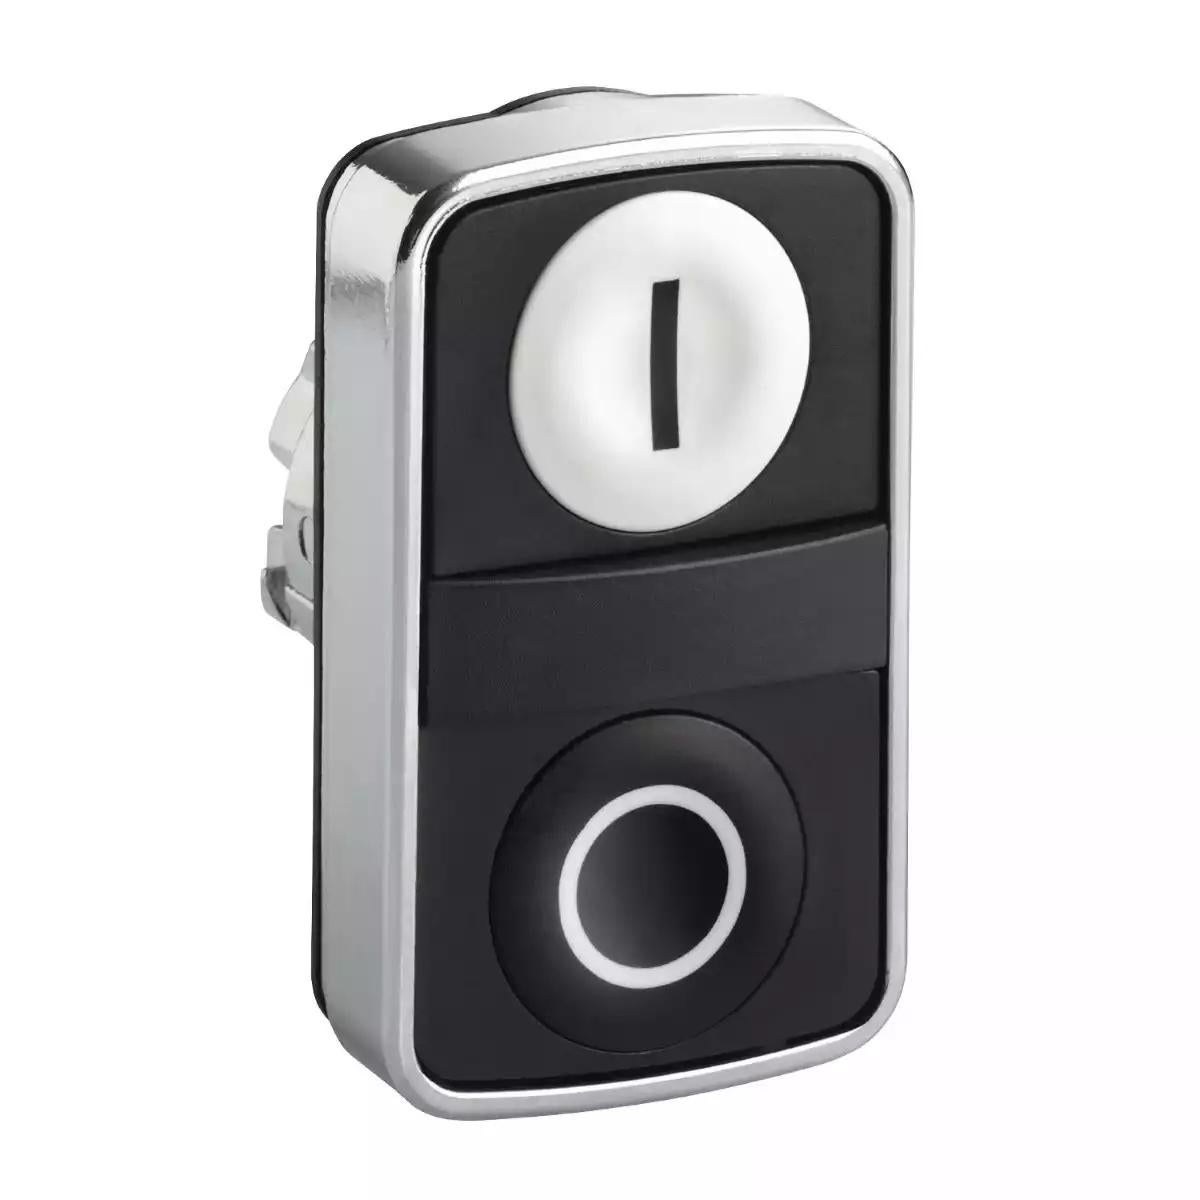 Double-headed push button head, Harmony XB4, metal, 22mm, 1 white flush marked I + 1 black flush marked O